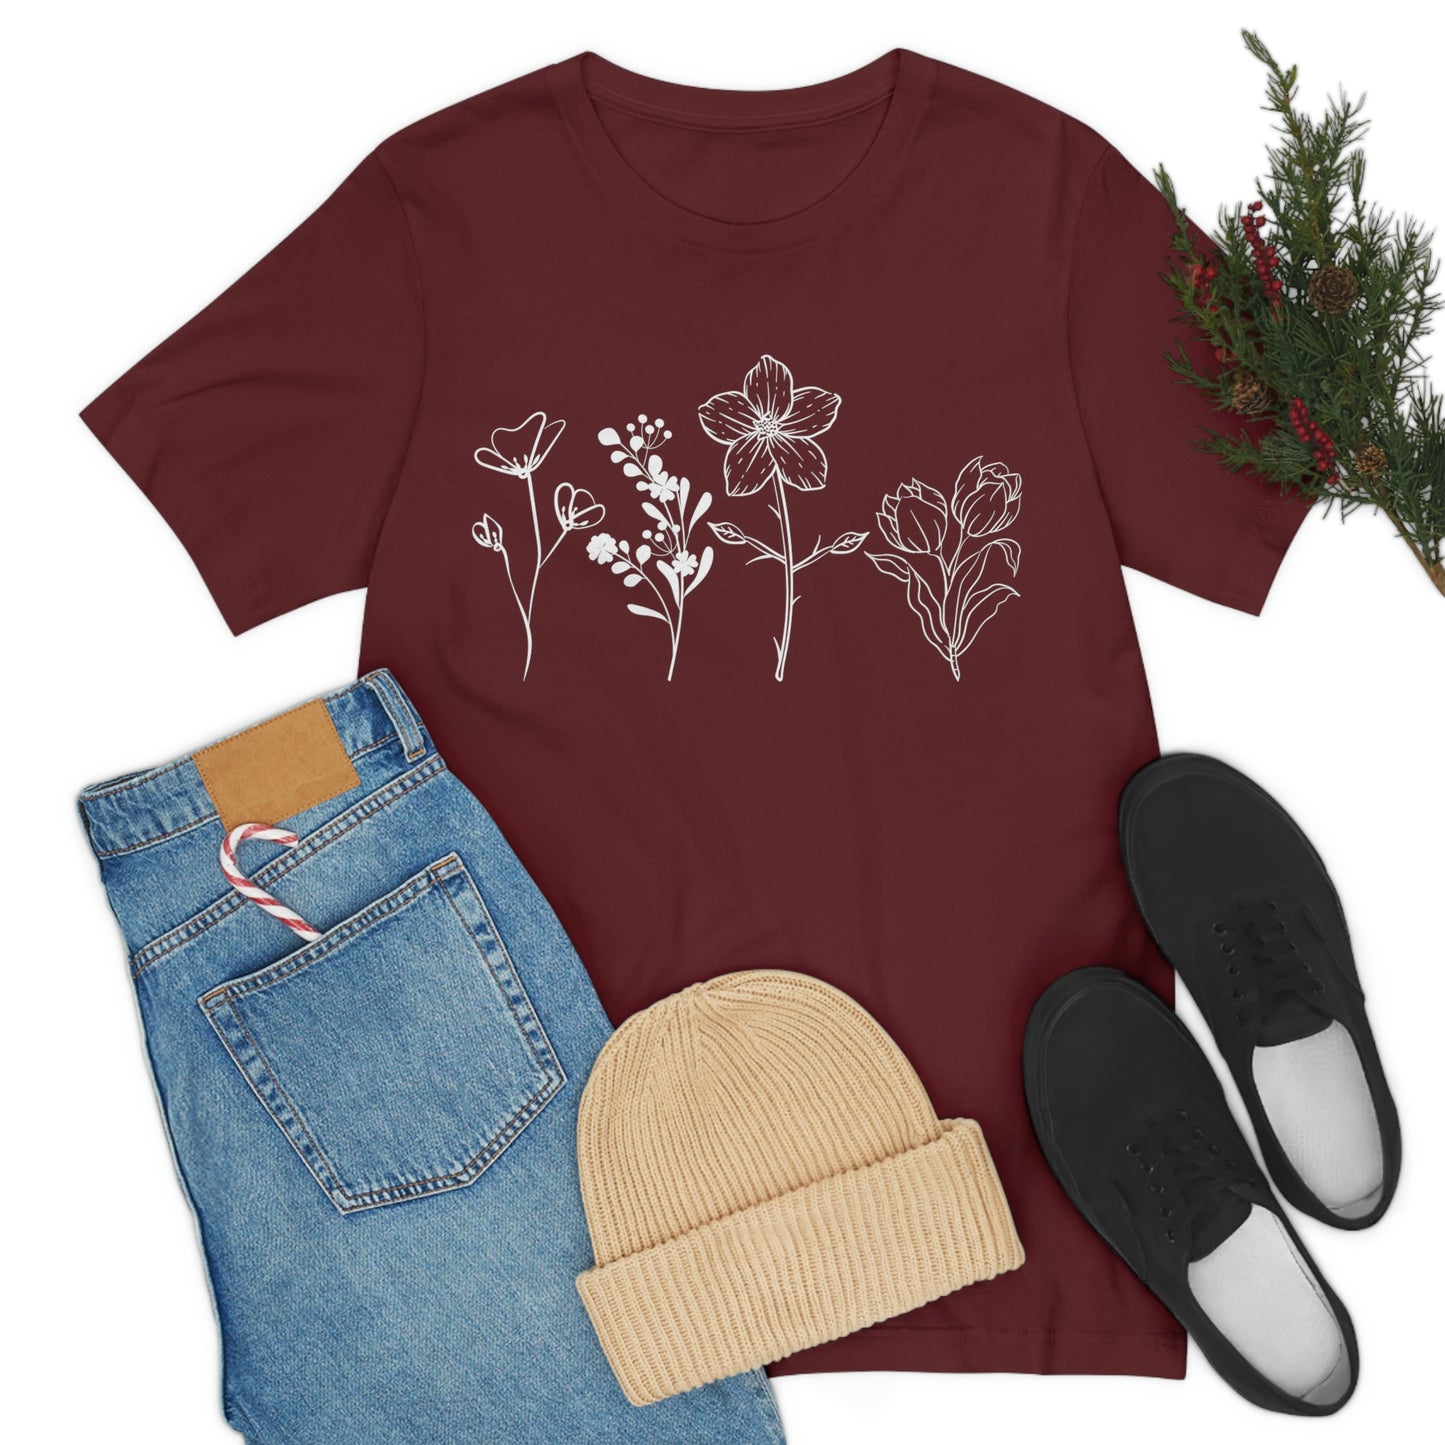 Wildflower shirt - Flower Tshirt - Flower lover shirt